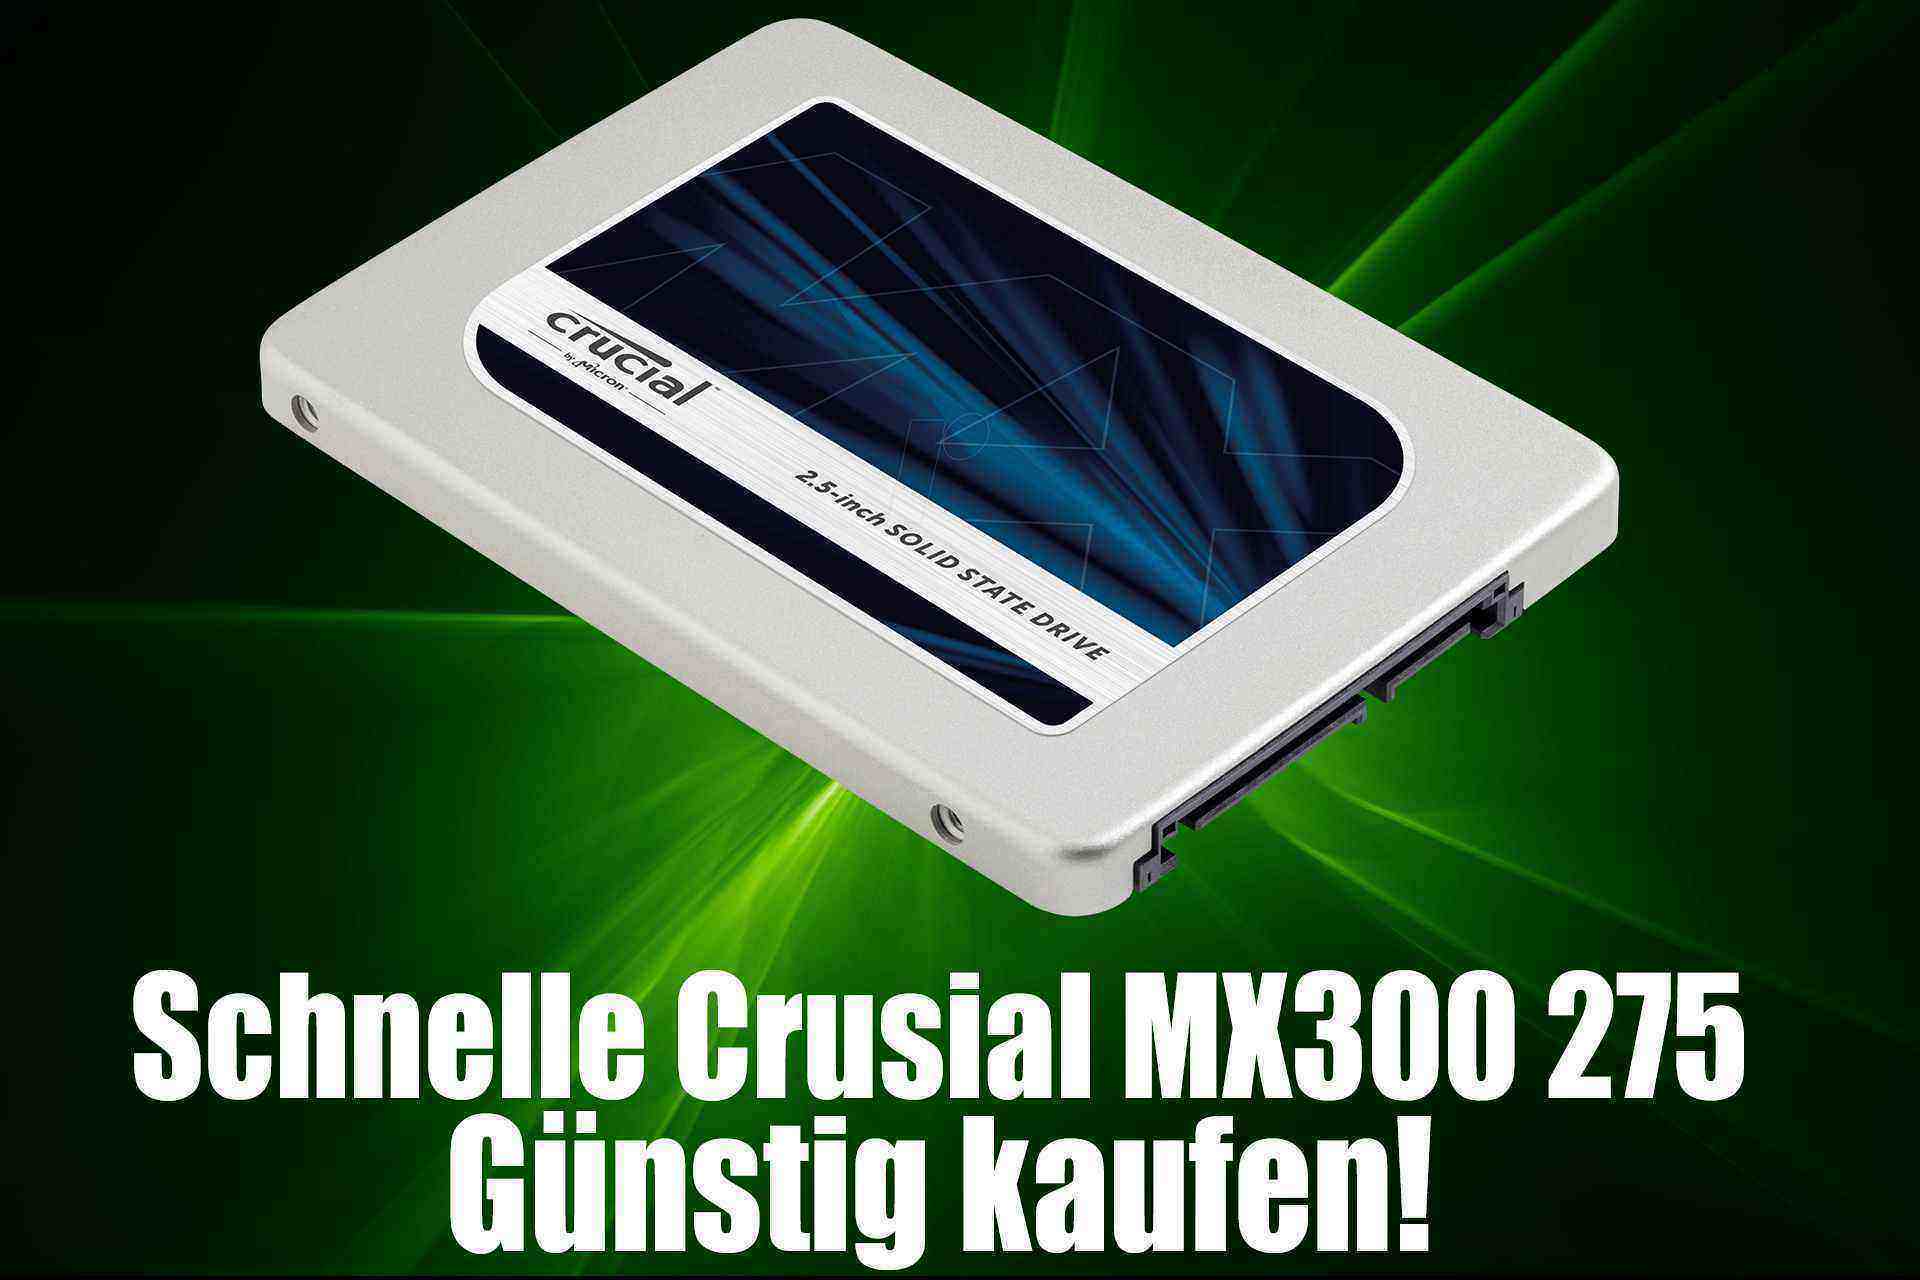 Crucial MX300 275 GB SSD im Angebot